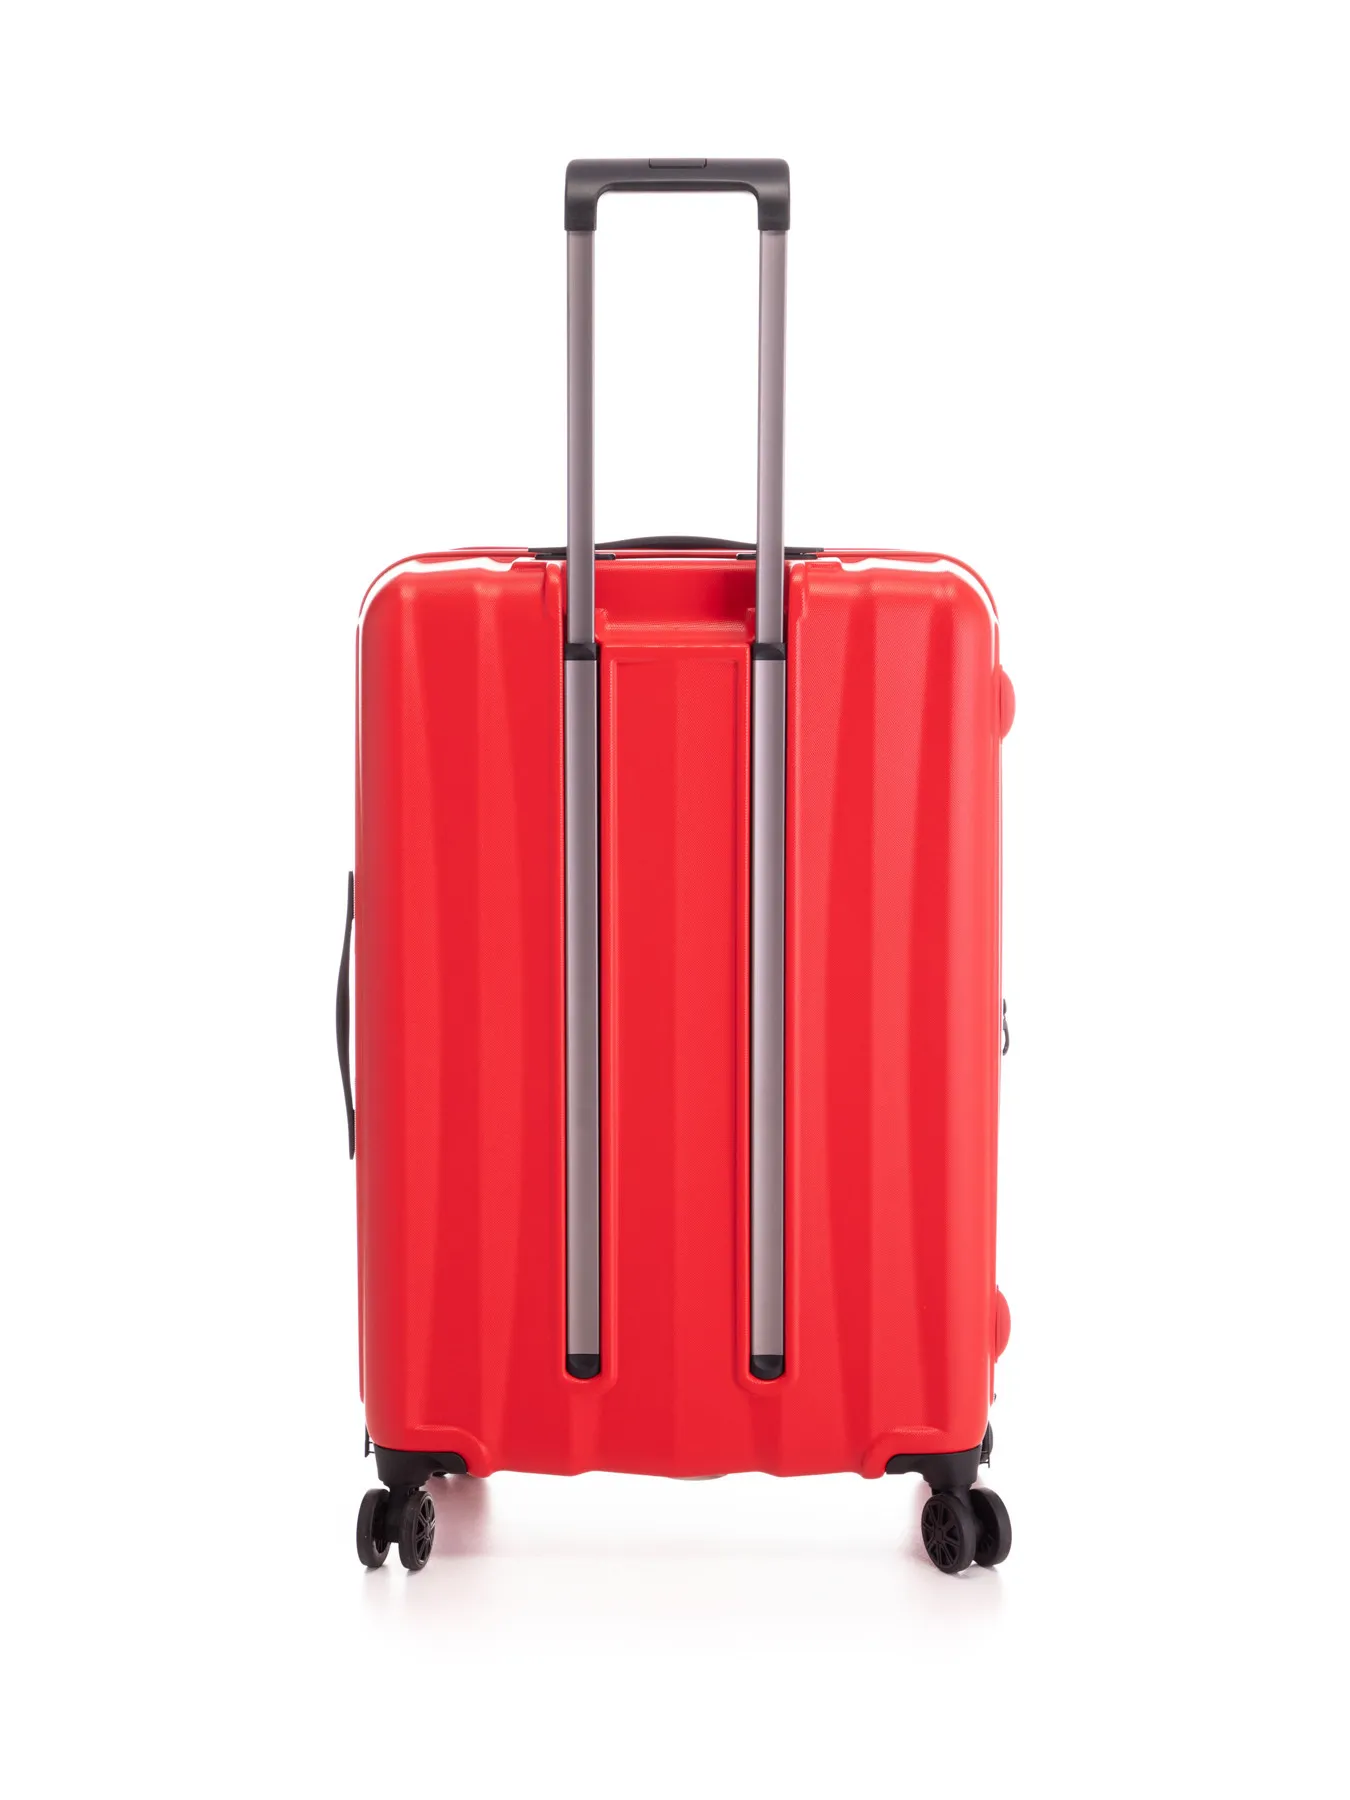 JUMP Tanoma Crveni veliki kofer 